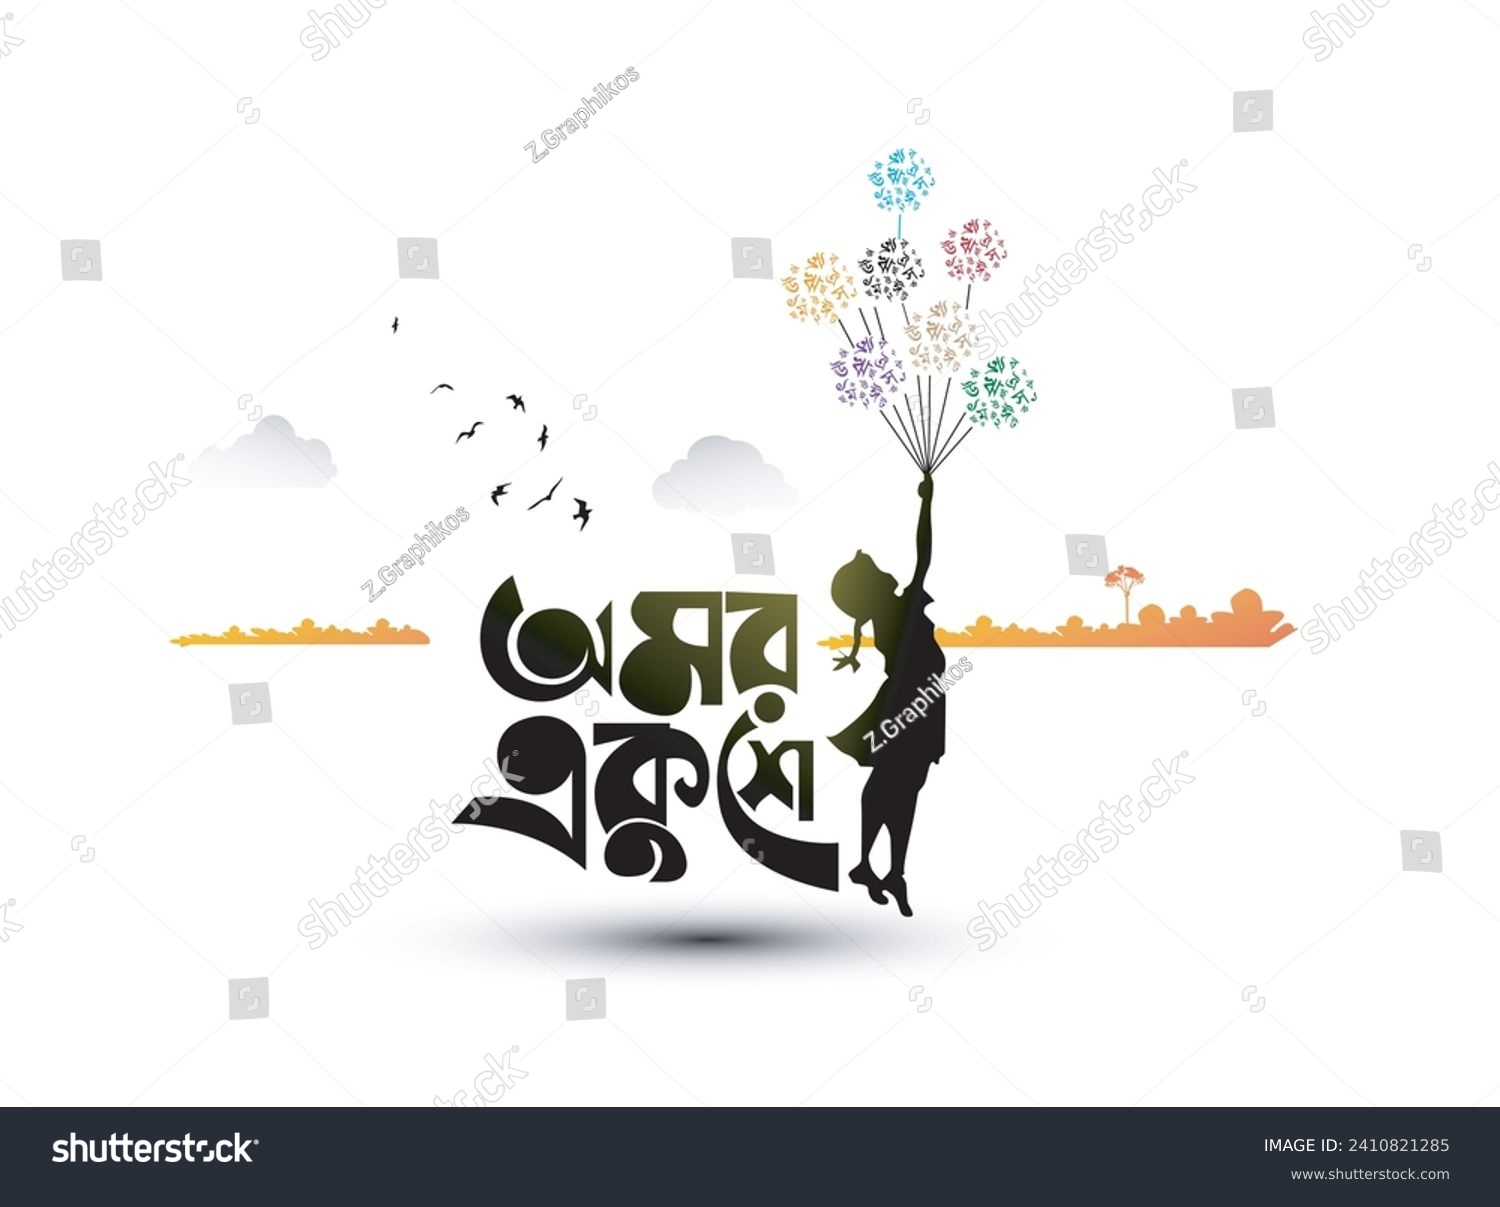 SVG of International Mother Language Day in Bangladesh, 21st February 1952. illustration  Bengali words say 